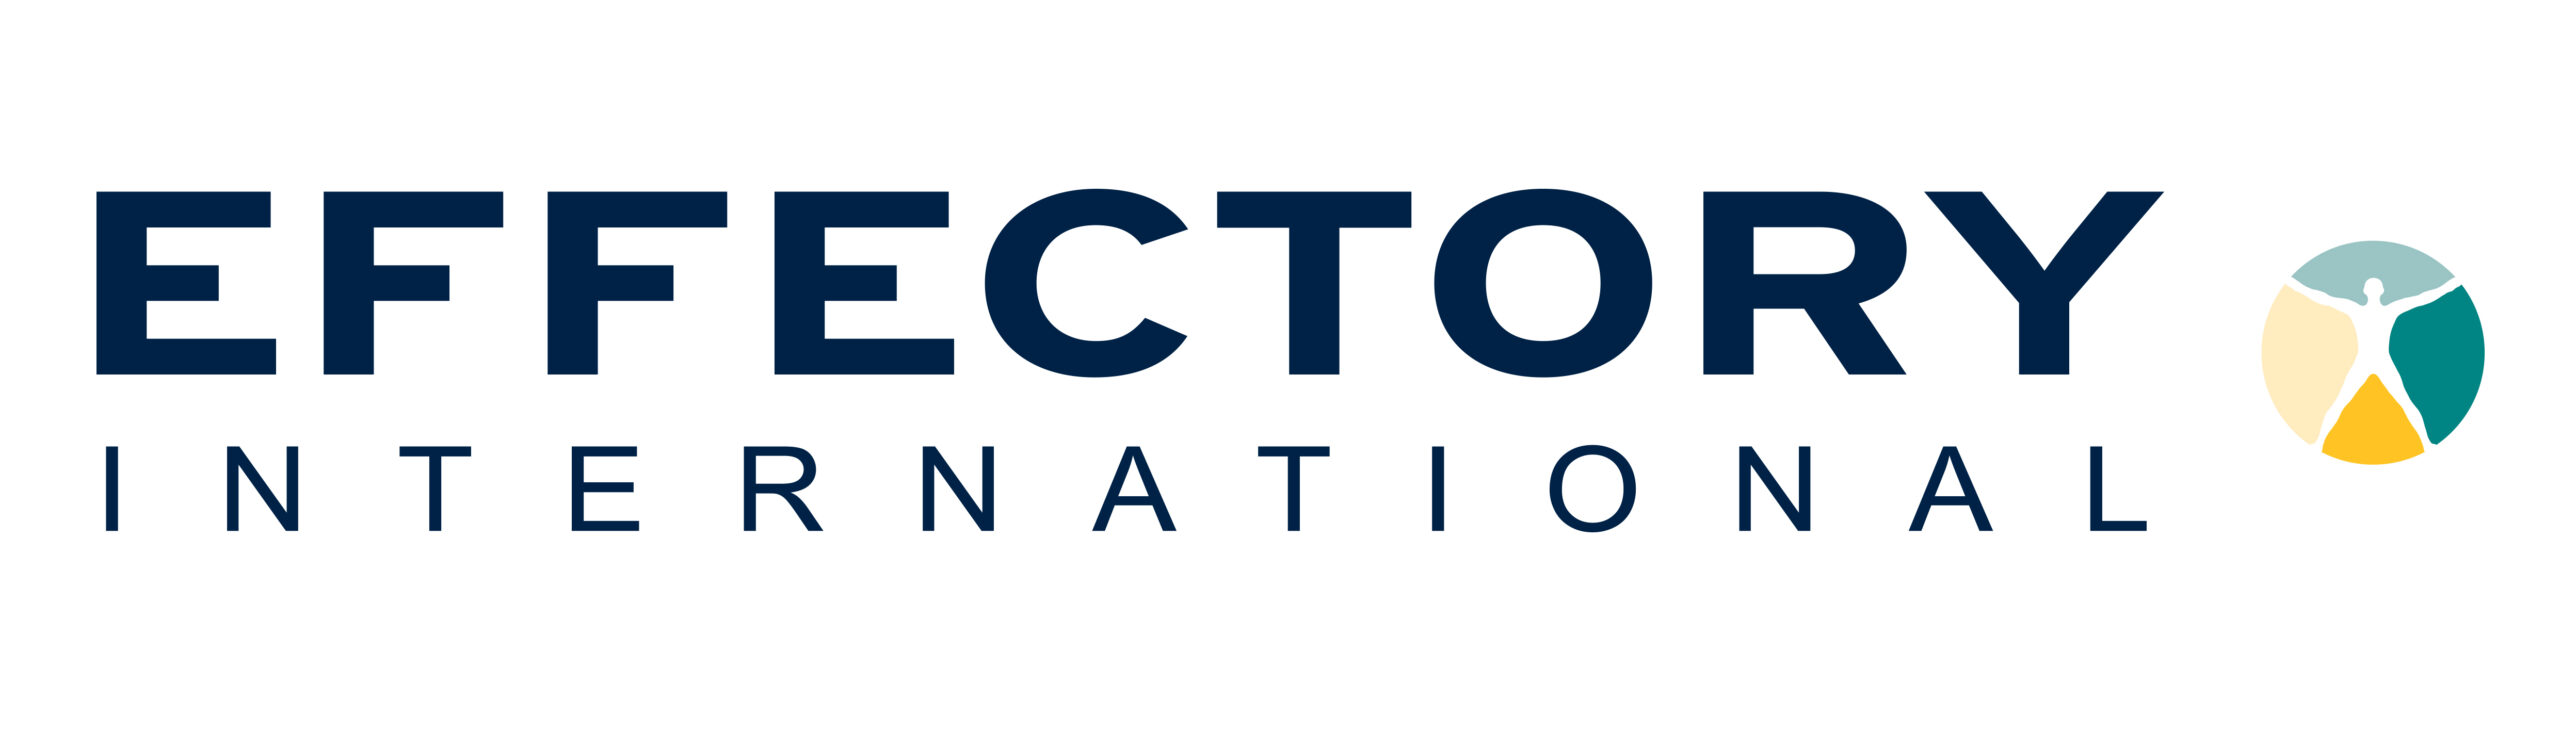 Effectory International logo hi-res